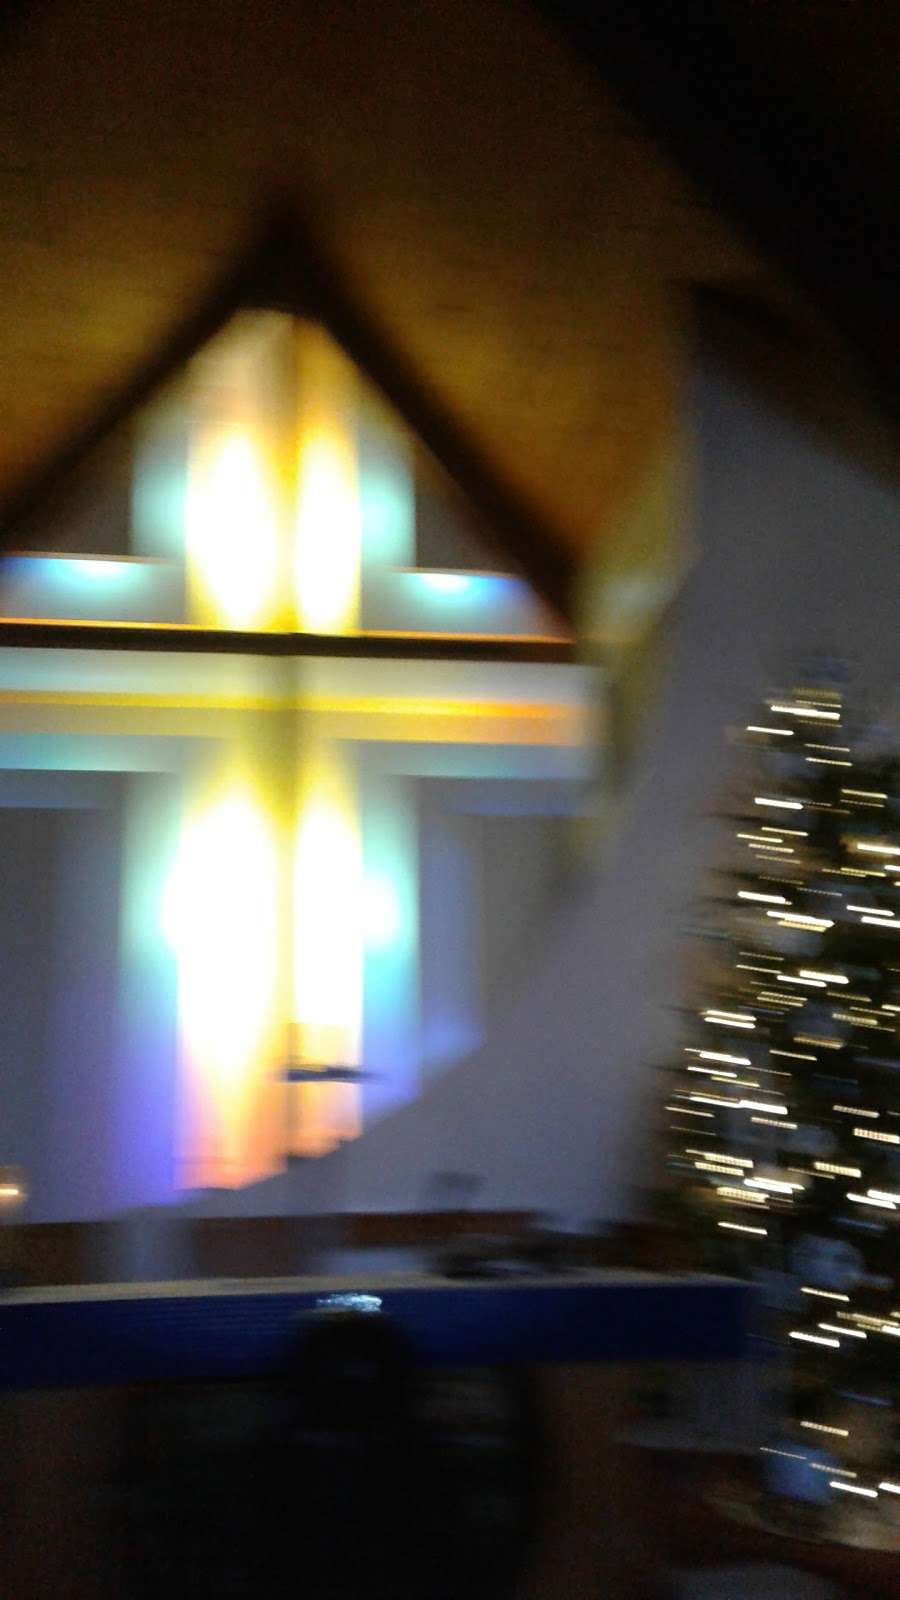 Advent Lutheran Church Elca | 7979 Meade St, Westminster, CO 80030, USA | Phone: (303) 428-7501